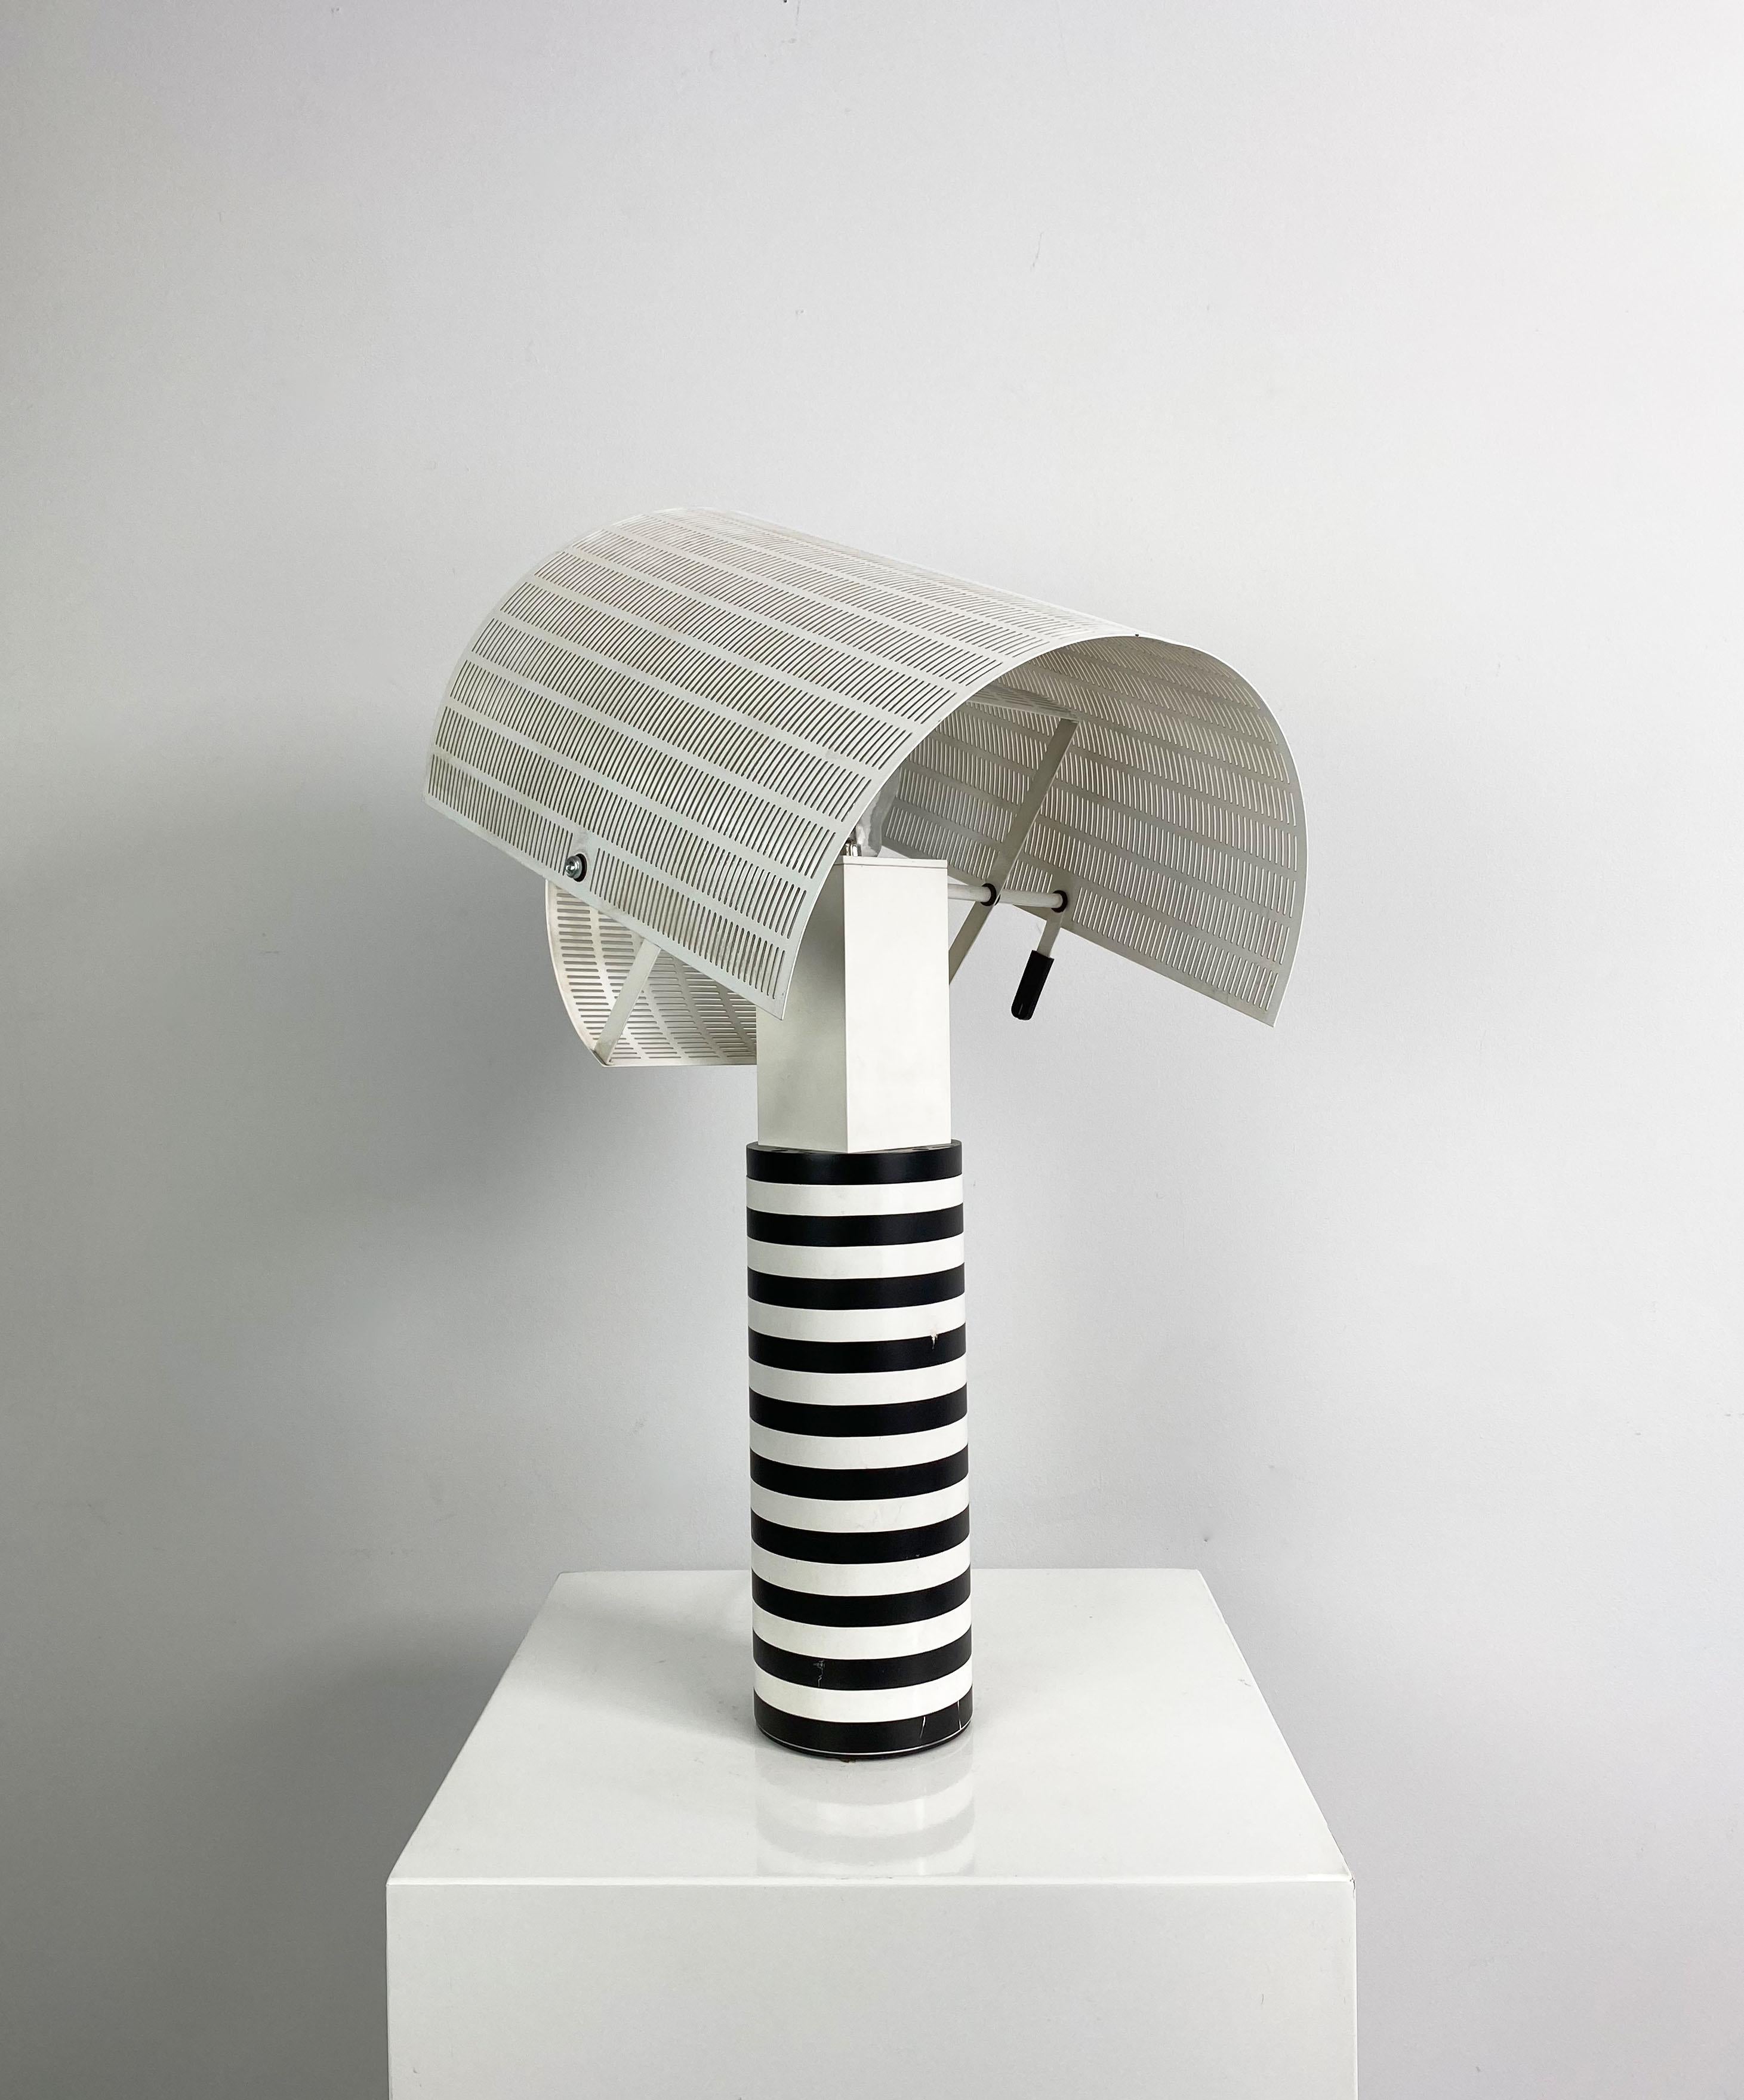 Late 20th Century Postmodern 'Shogun' Table Lamp by Mario Botta for Artemide, c.1980